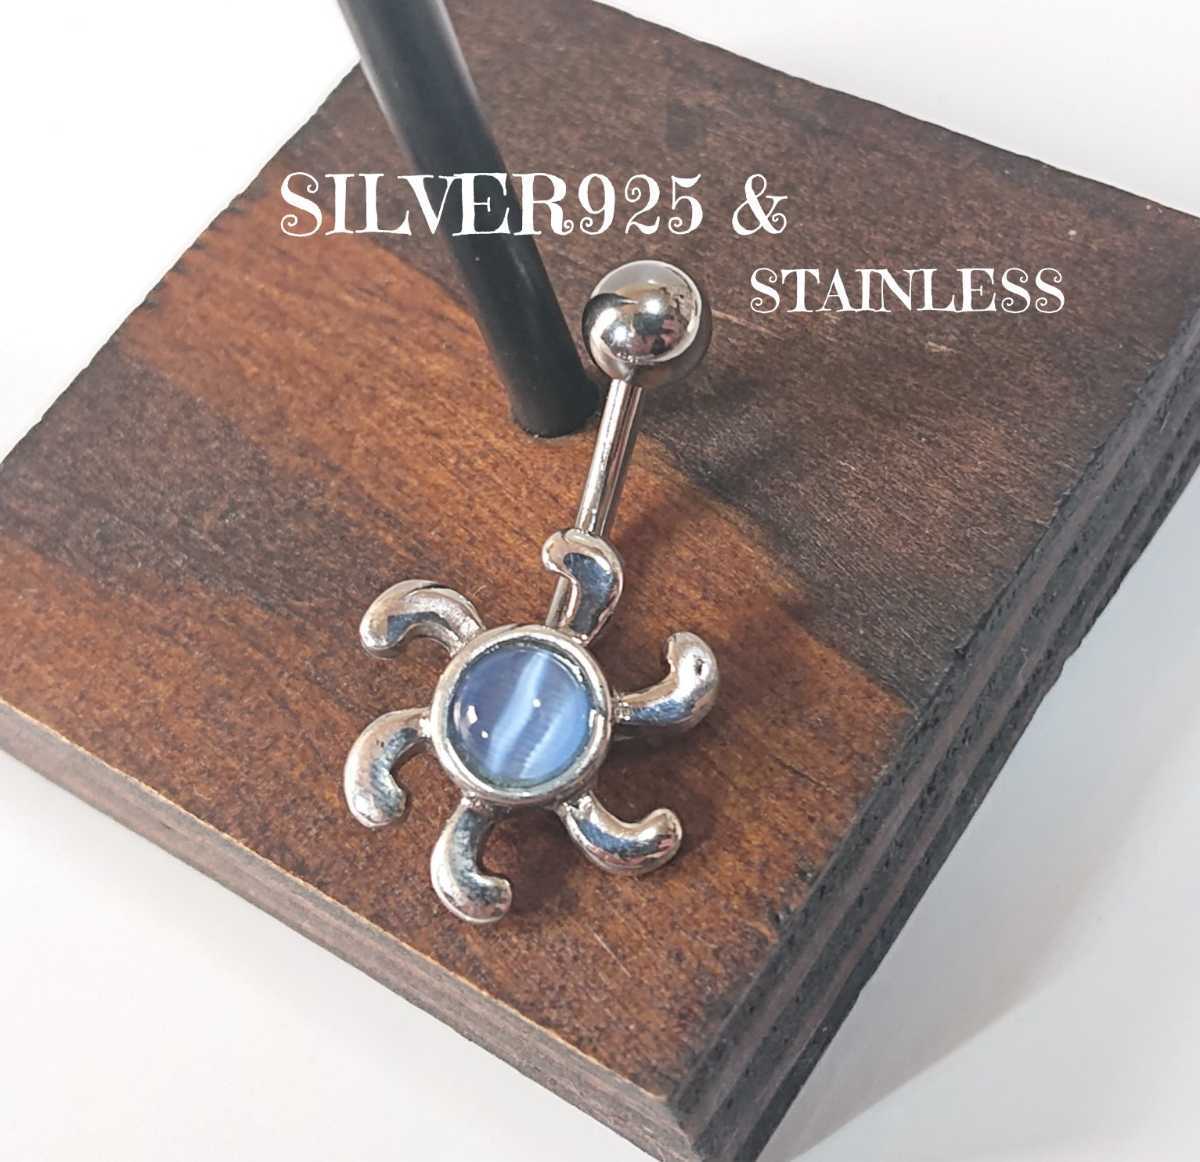 5099 SILVER925 blue cat's-eye body pierce silver 925 made of stainless steel 16G sun jewel barbell .....pi ear pretty 